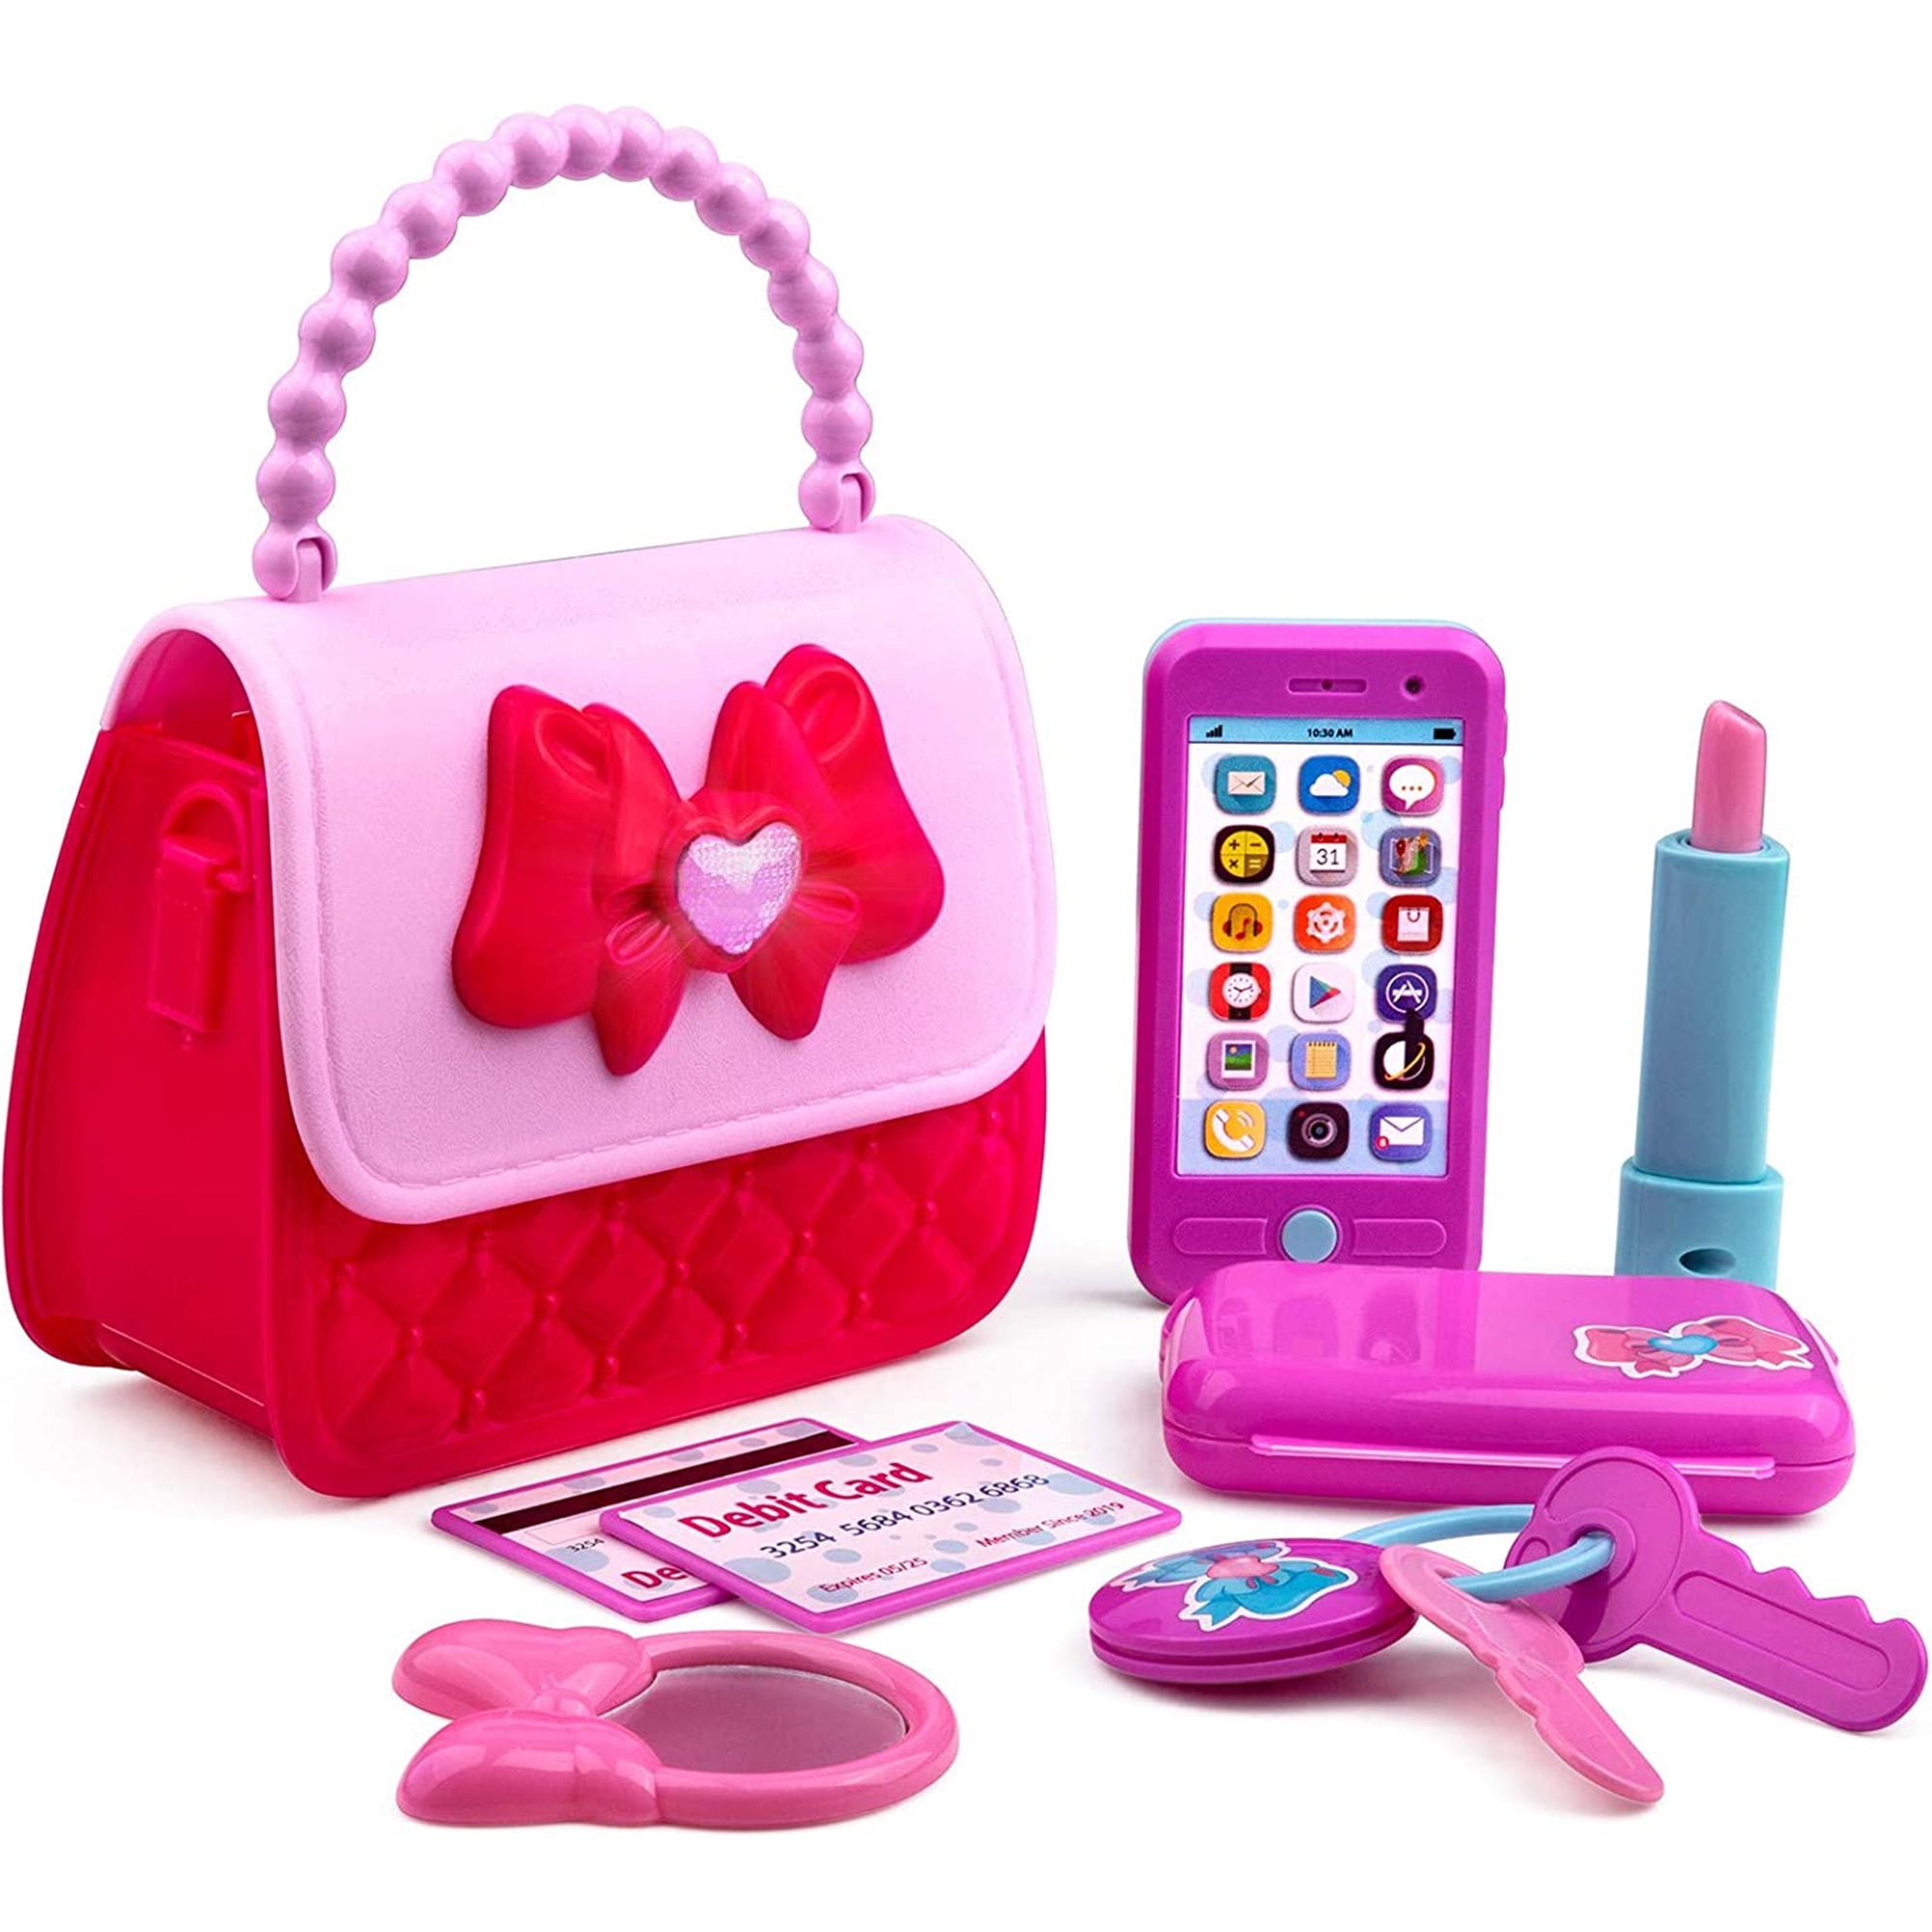 Playkidz Princess My First Purse Set 8 Piece Kids Play Accessories Pretend toy Cool Girl Includes Phone Bag Lights Sound 82f3e1fa bd45 4c68 b32f 09f06d74bc07.32b652190f4586516c6ac7c3a388ab54